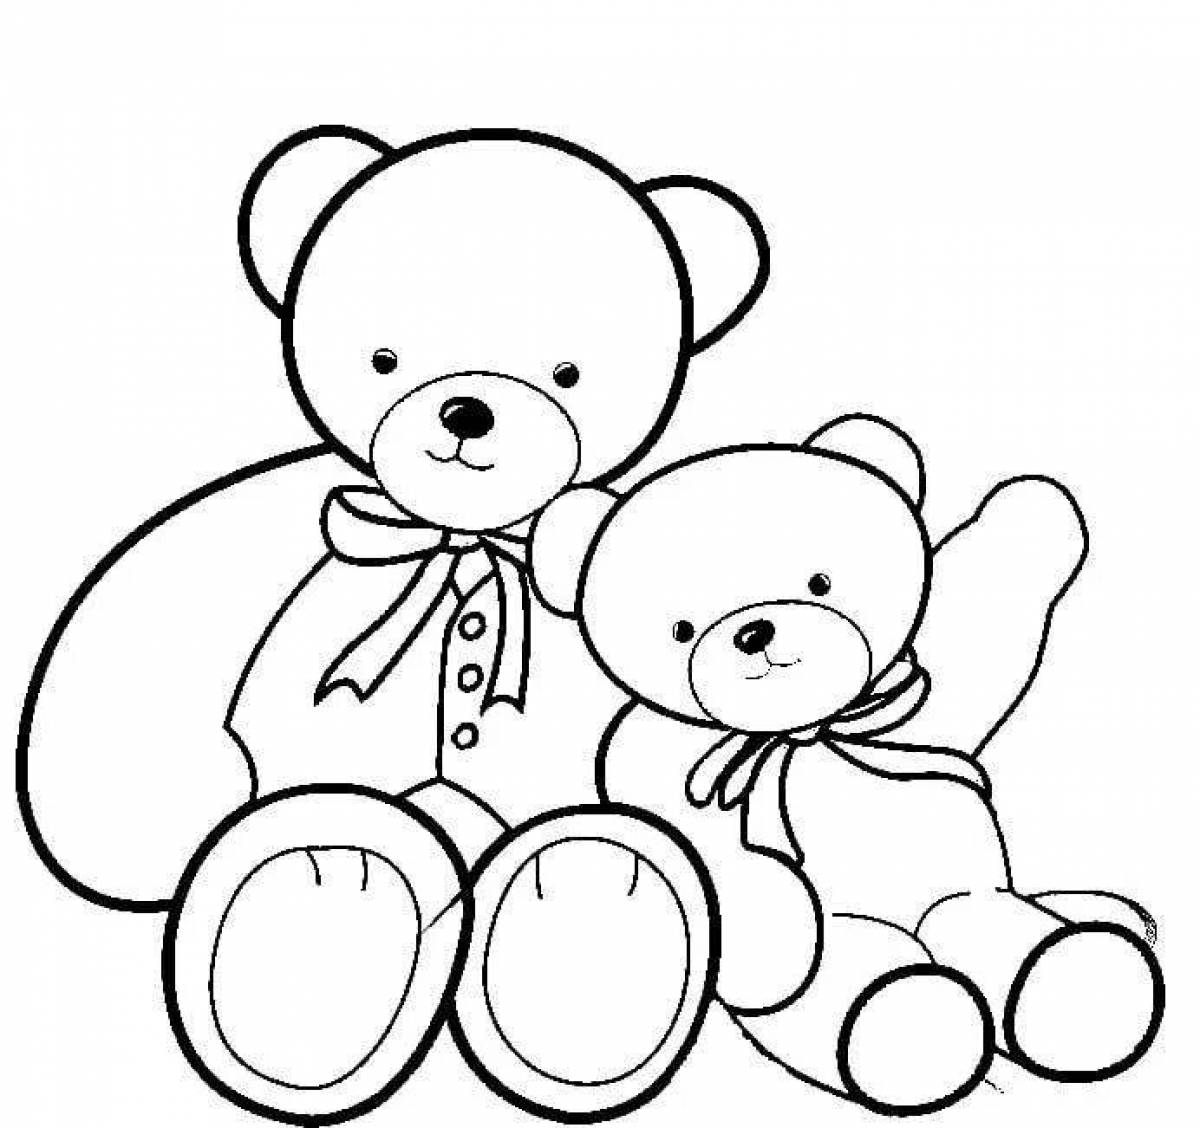 Playful teddy bear drawing